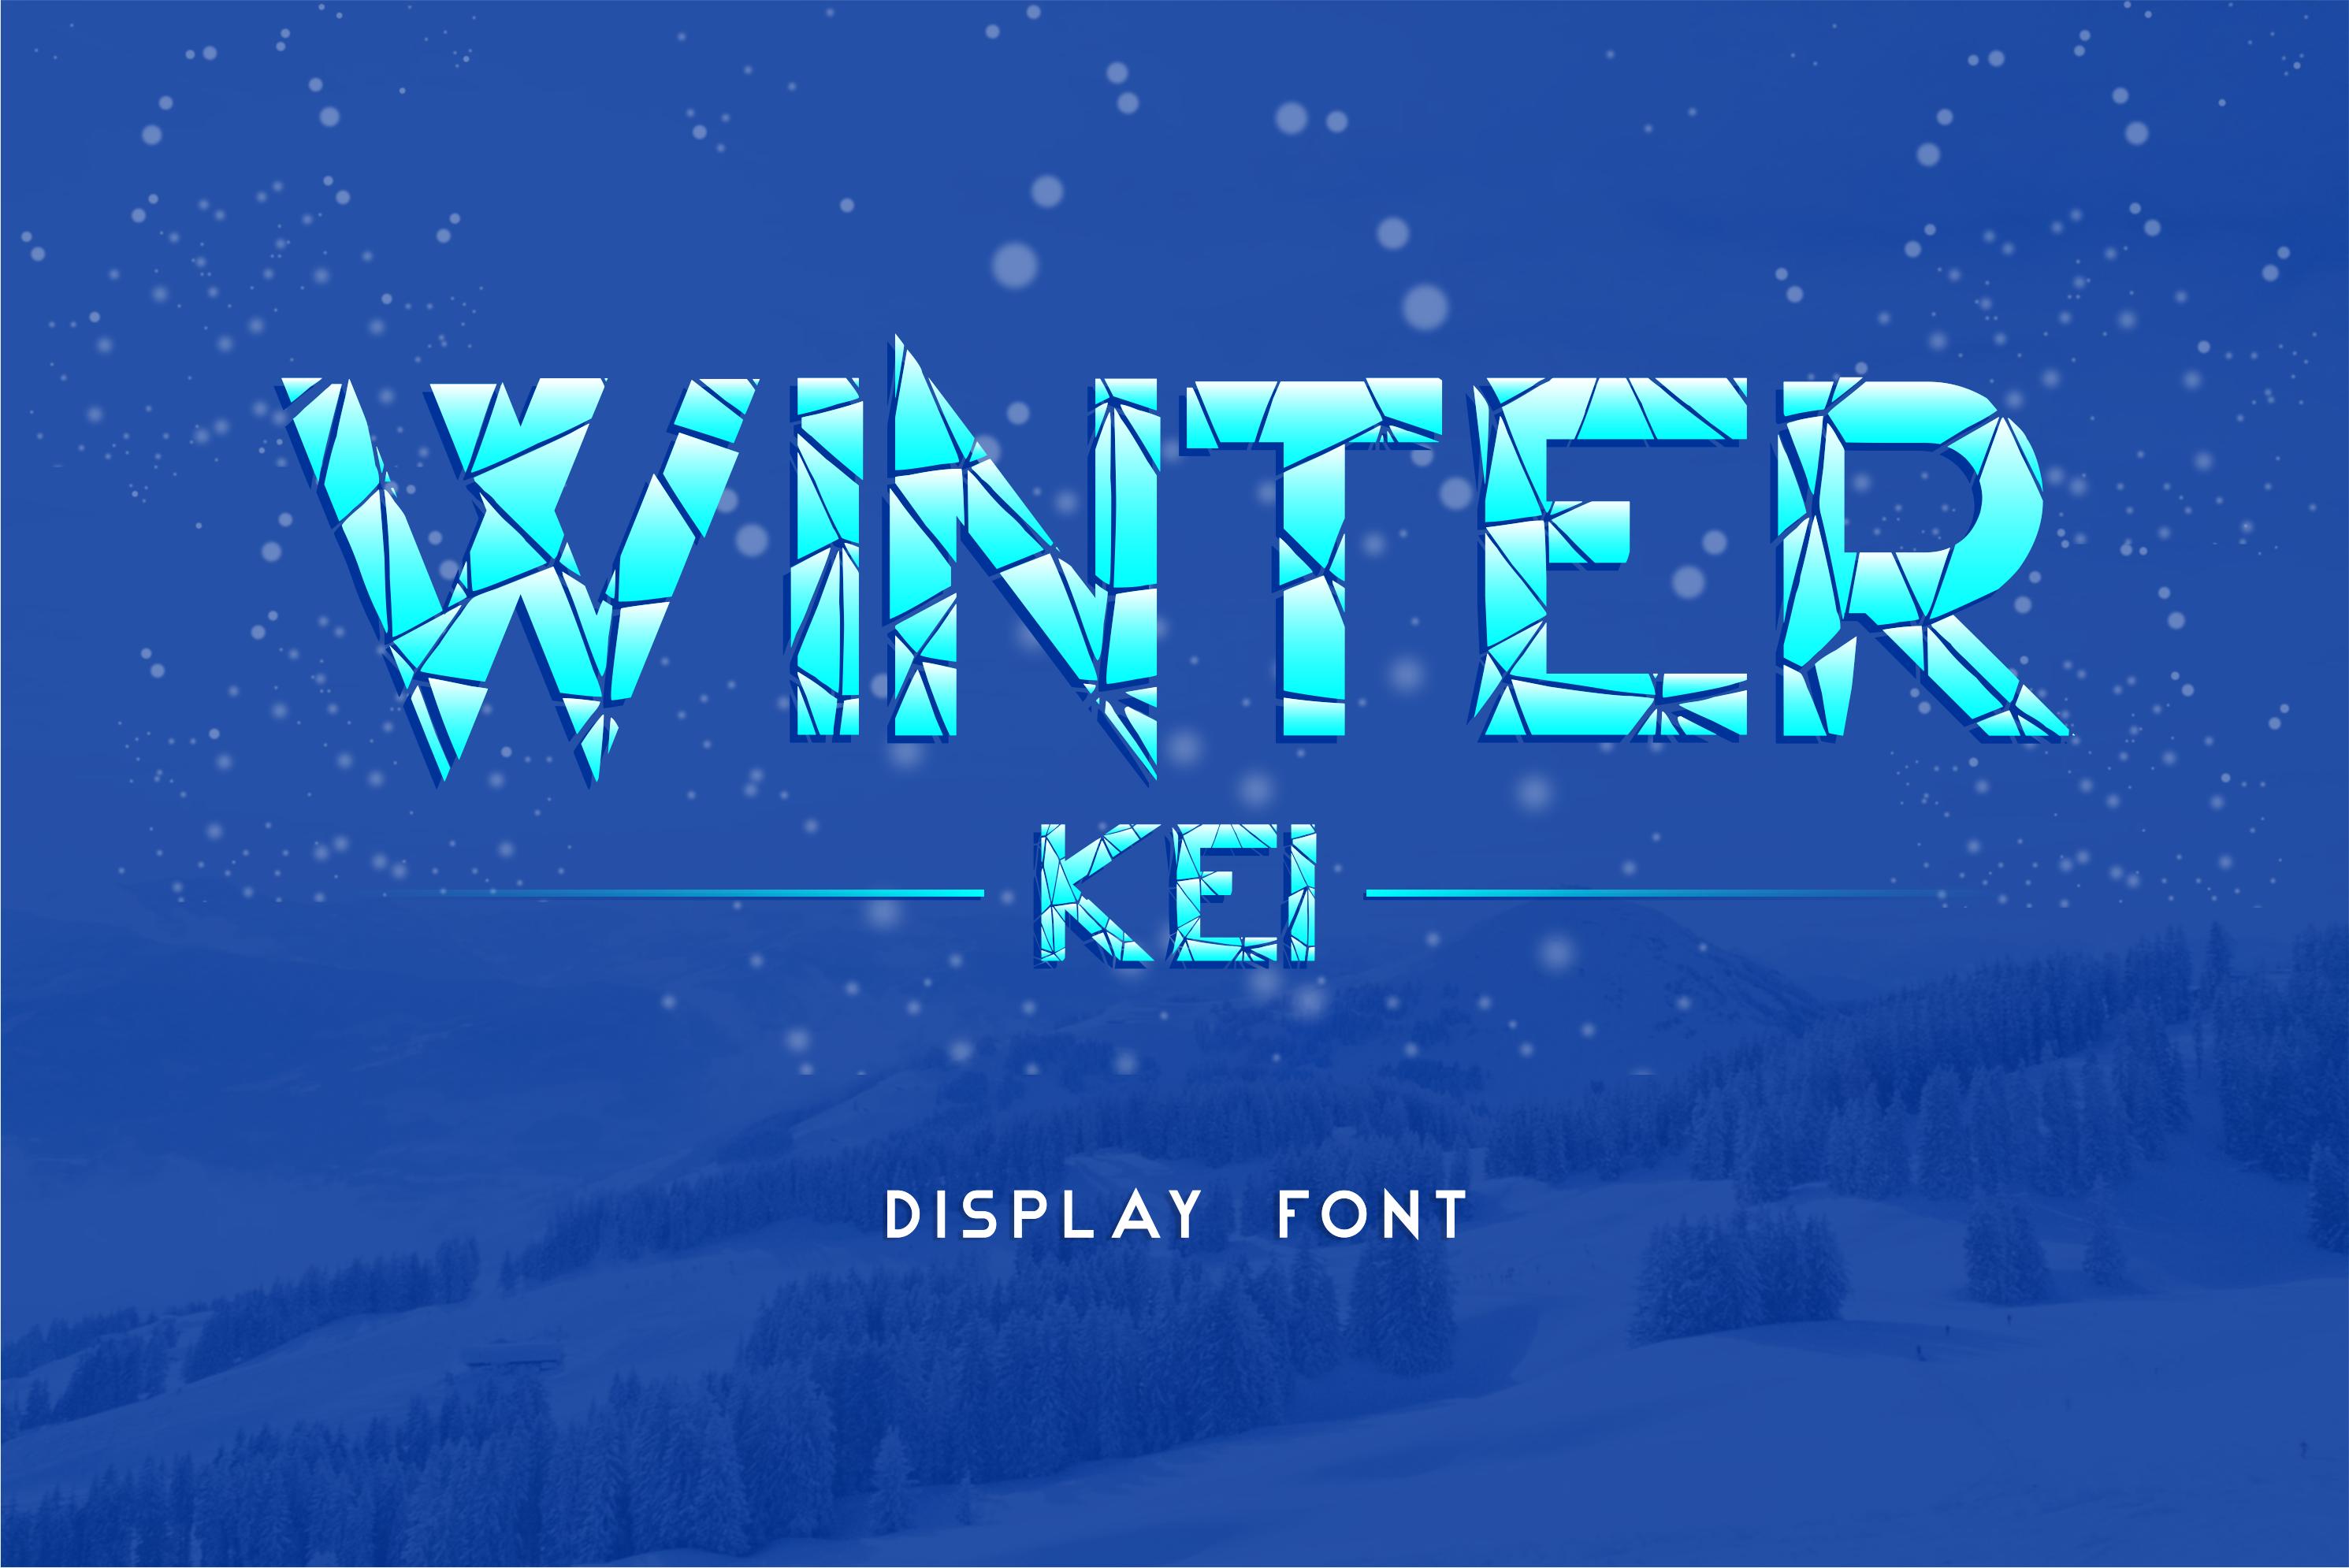 Winter Kei Font